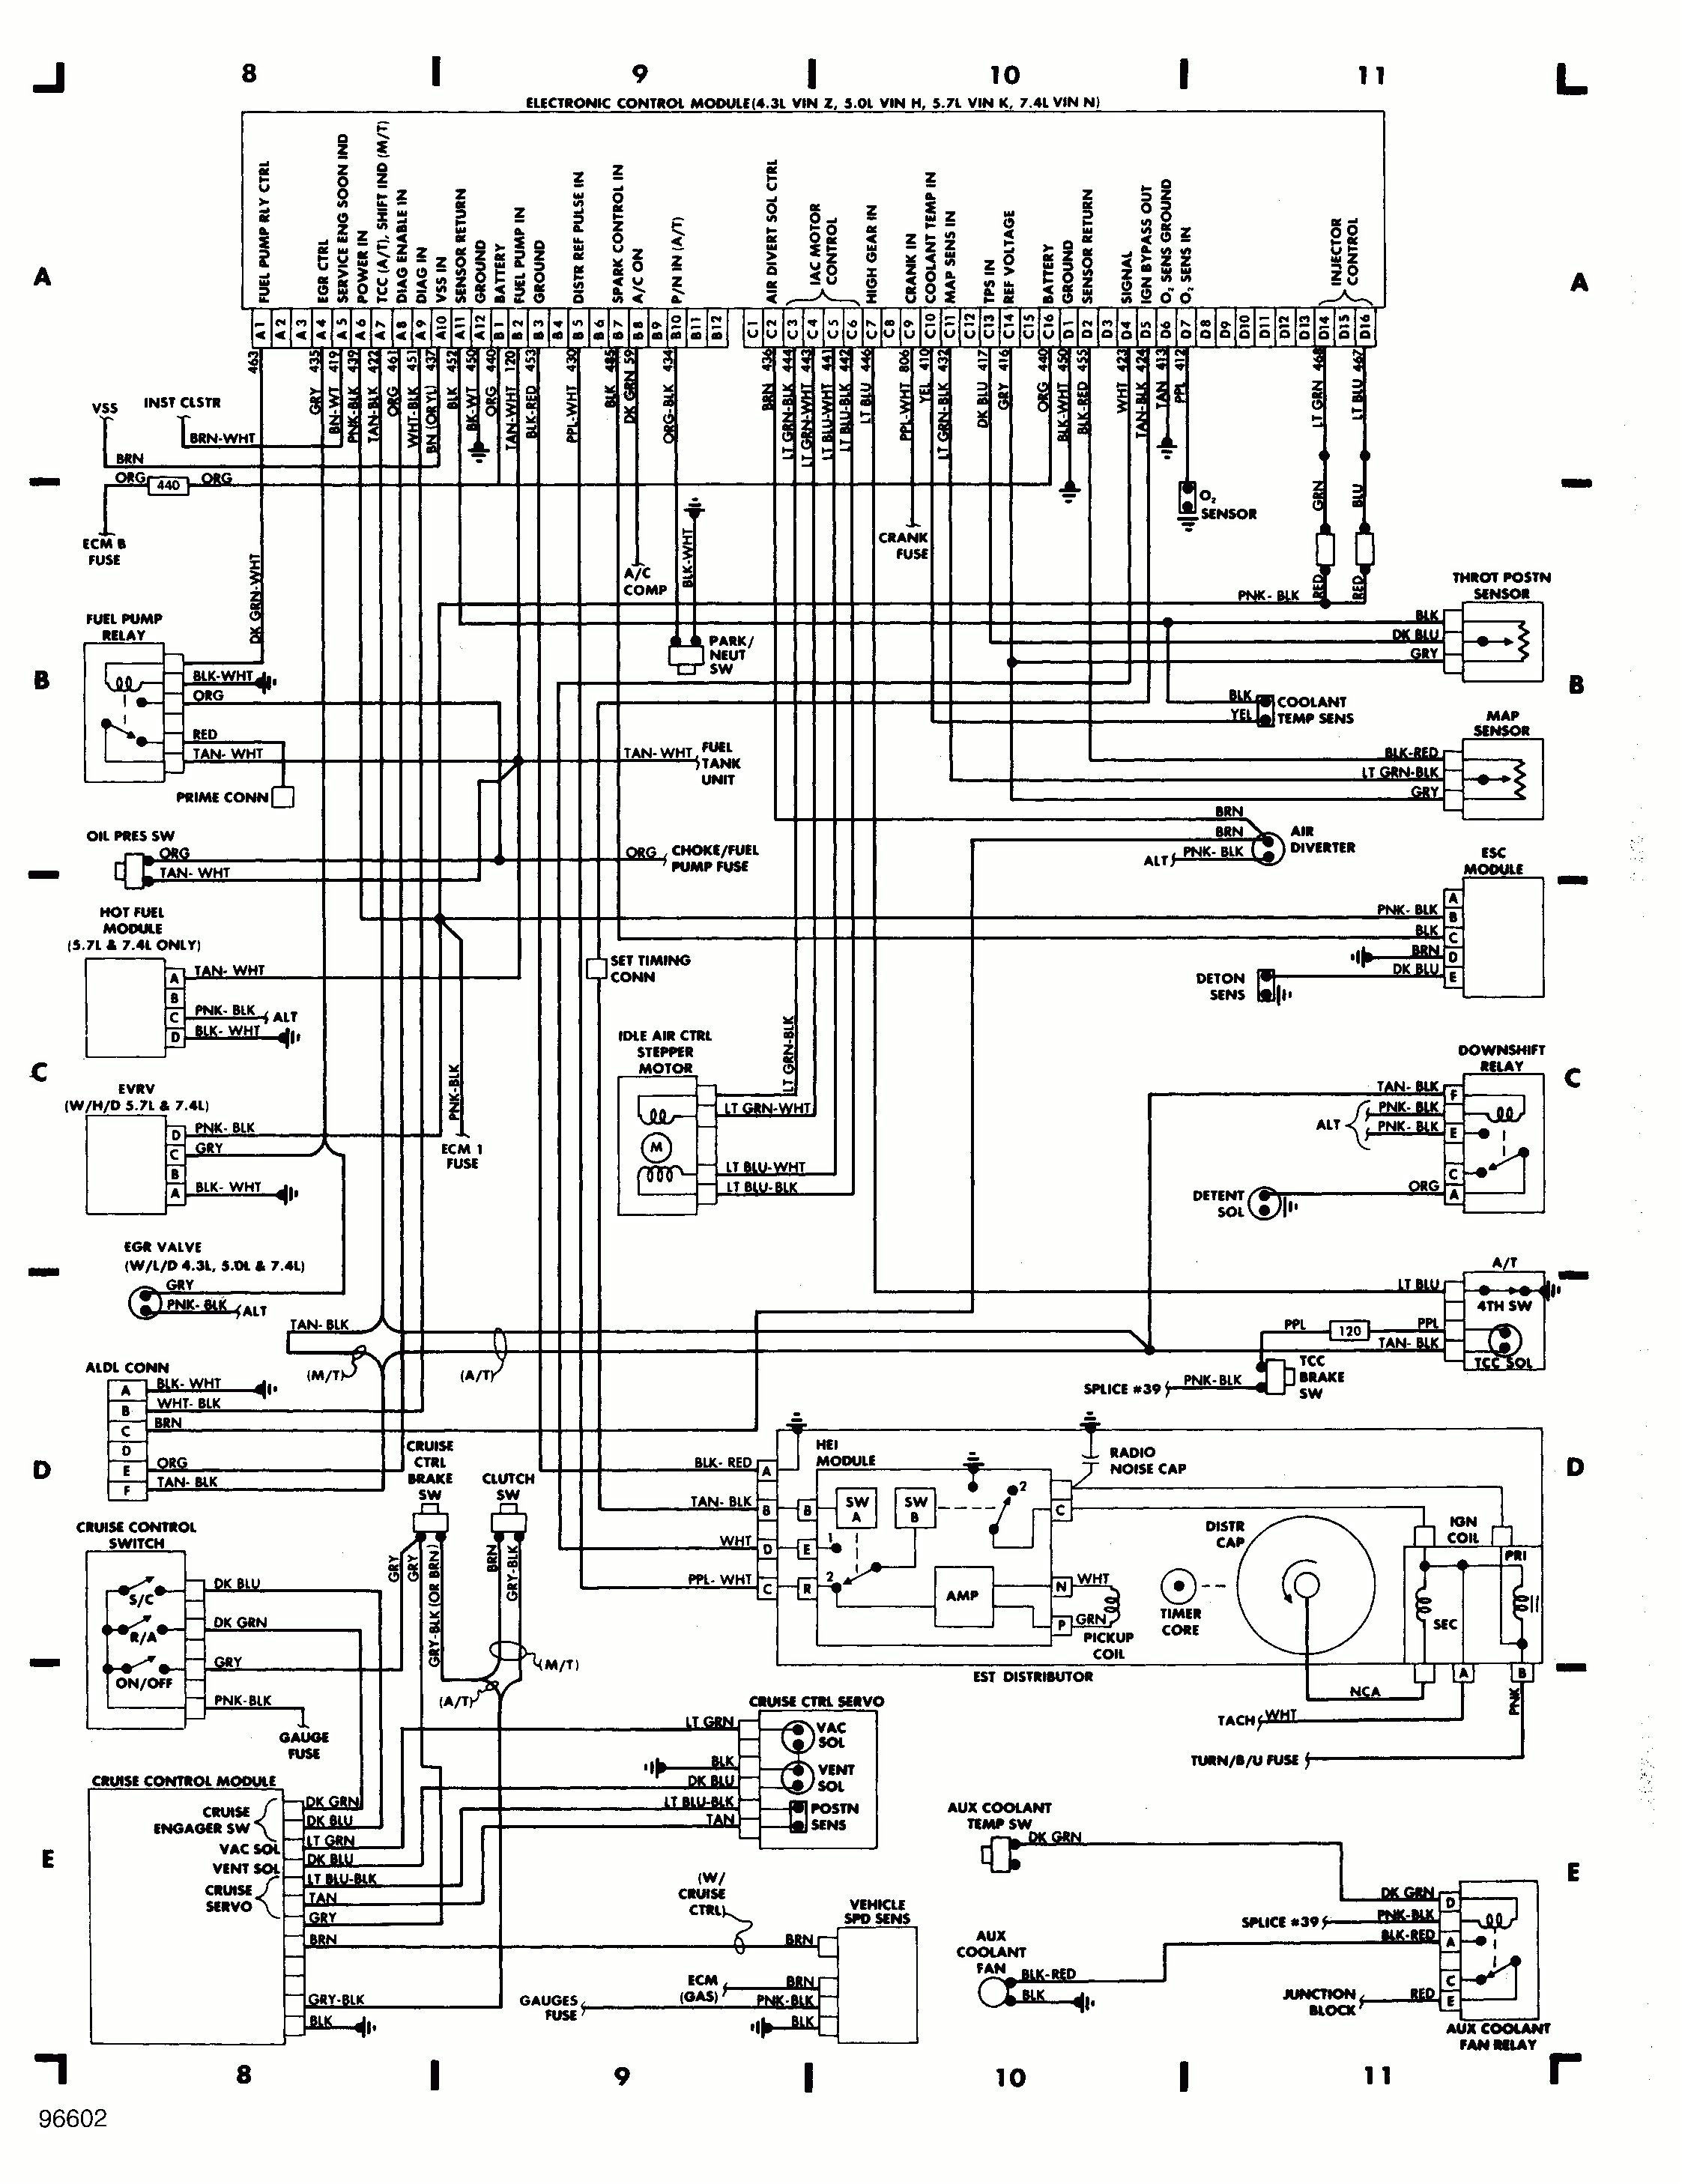 v8 engine wiring harness diagram wiring diagram mega 350 engine wiring harness wiring diagram toolbox v8